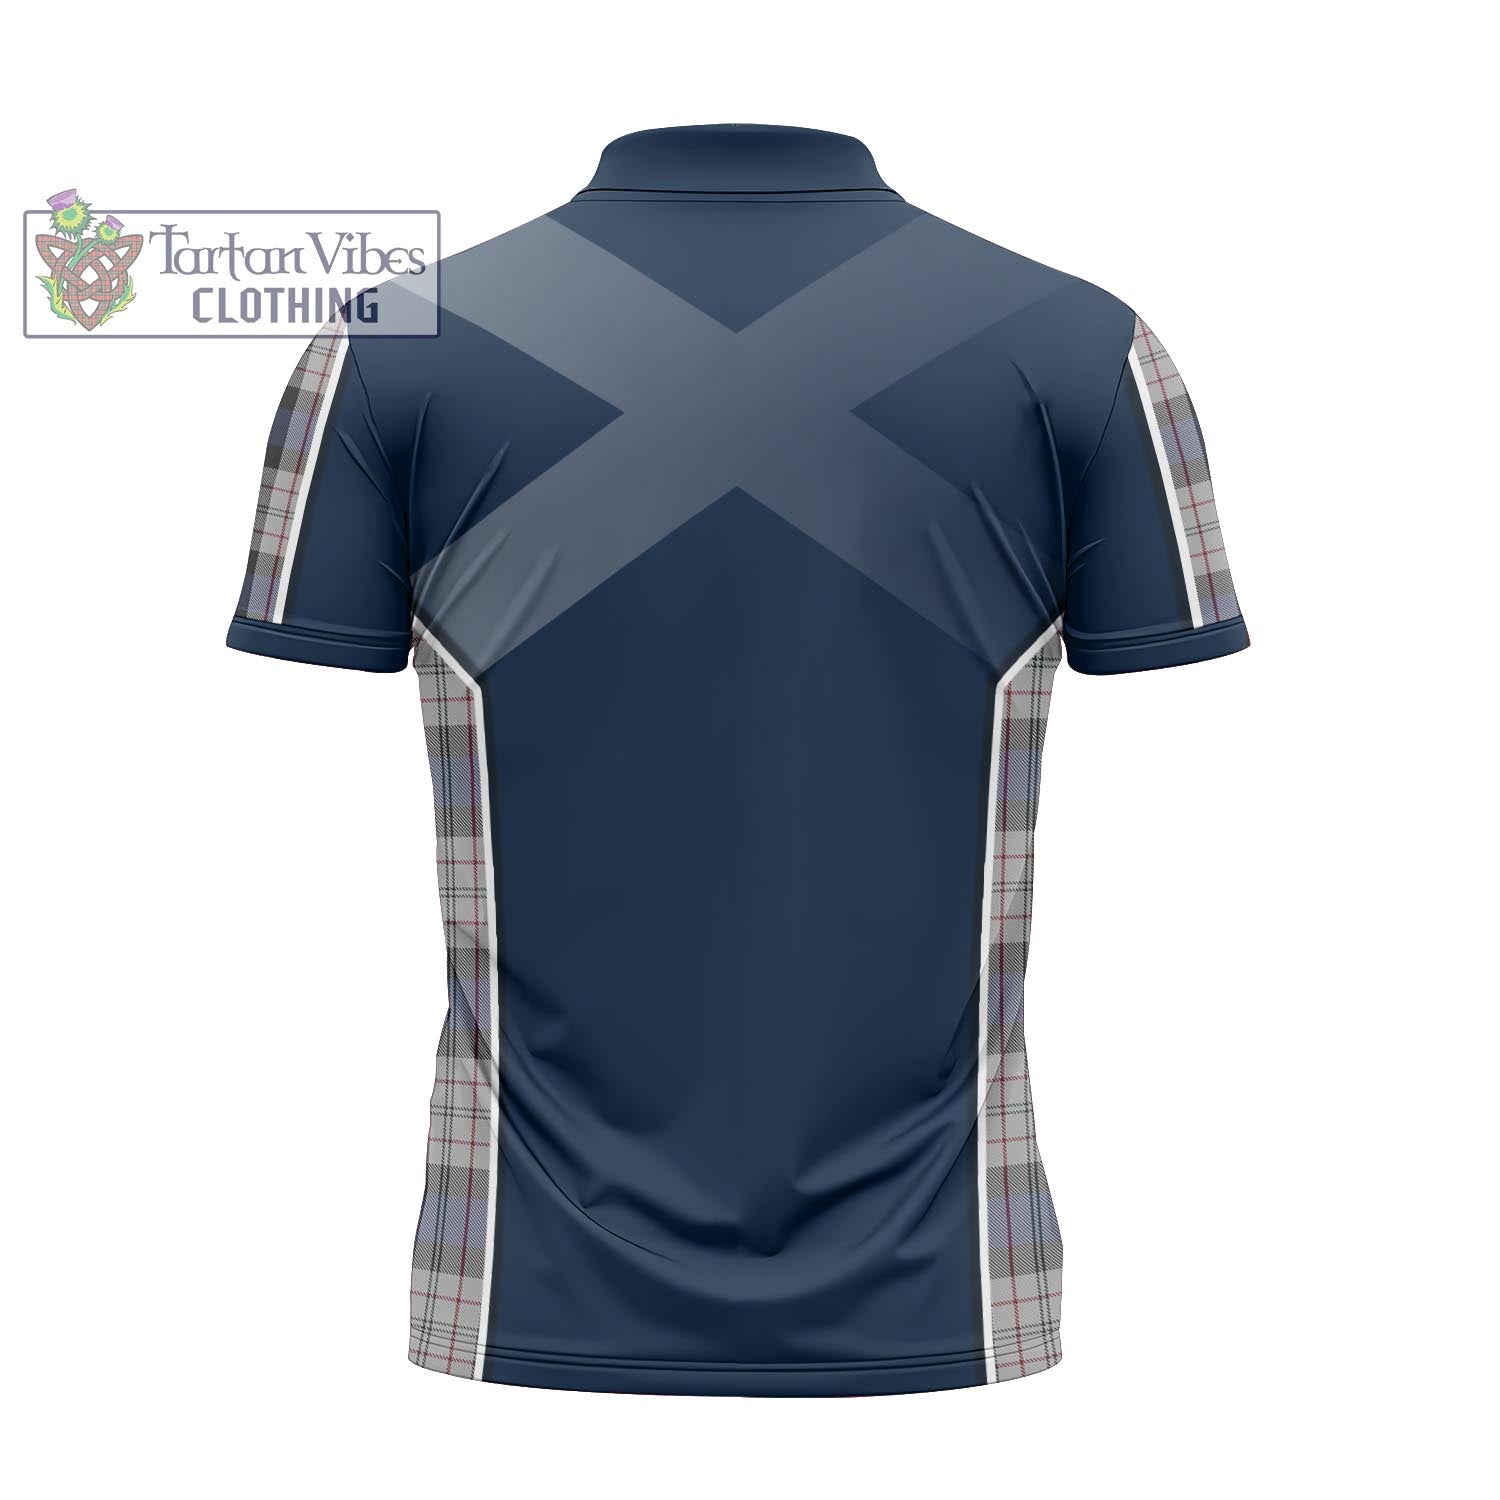 Tartan Vibes Clothing Ferguson Dress Tartan Zipper Polo Shirt with Family Crest and Scottish Thistle Vibes Sport Style